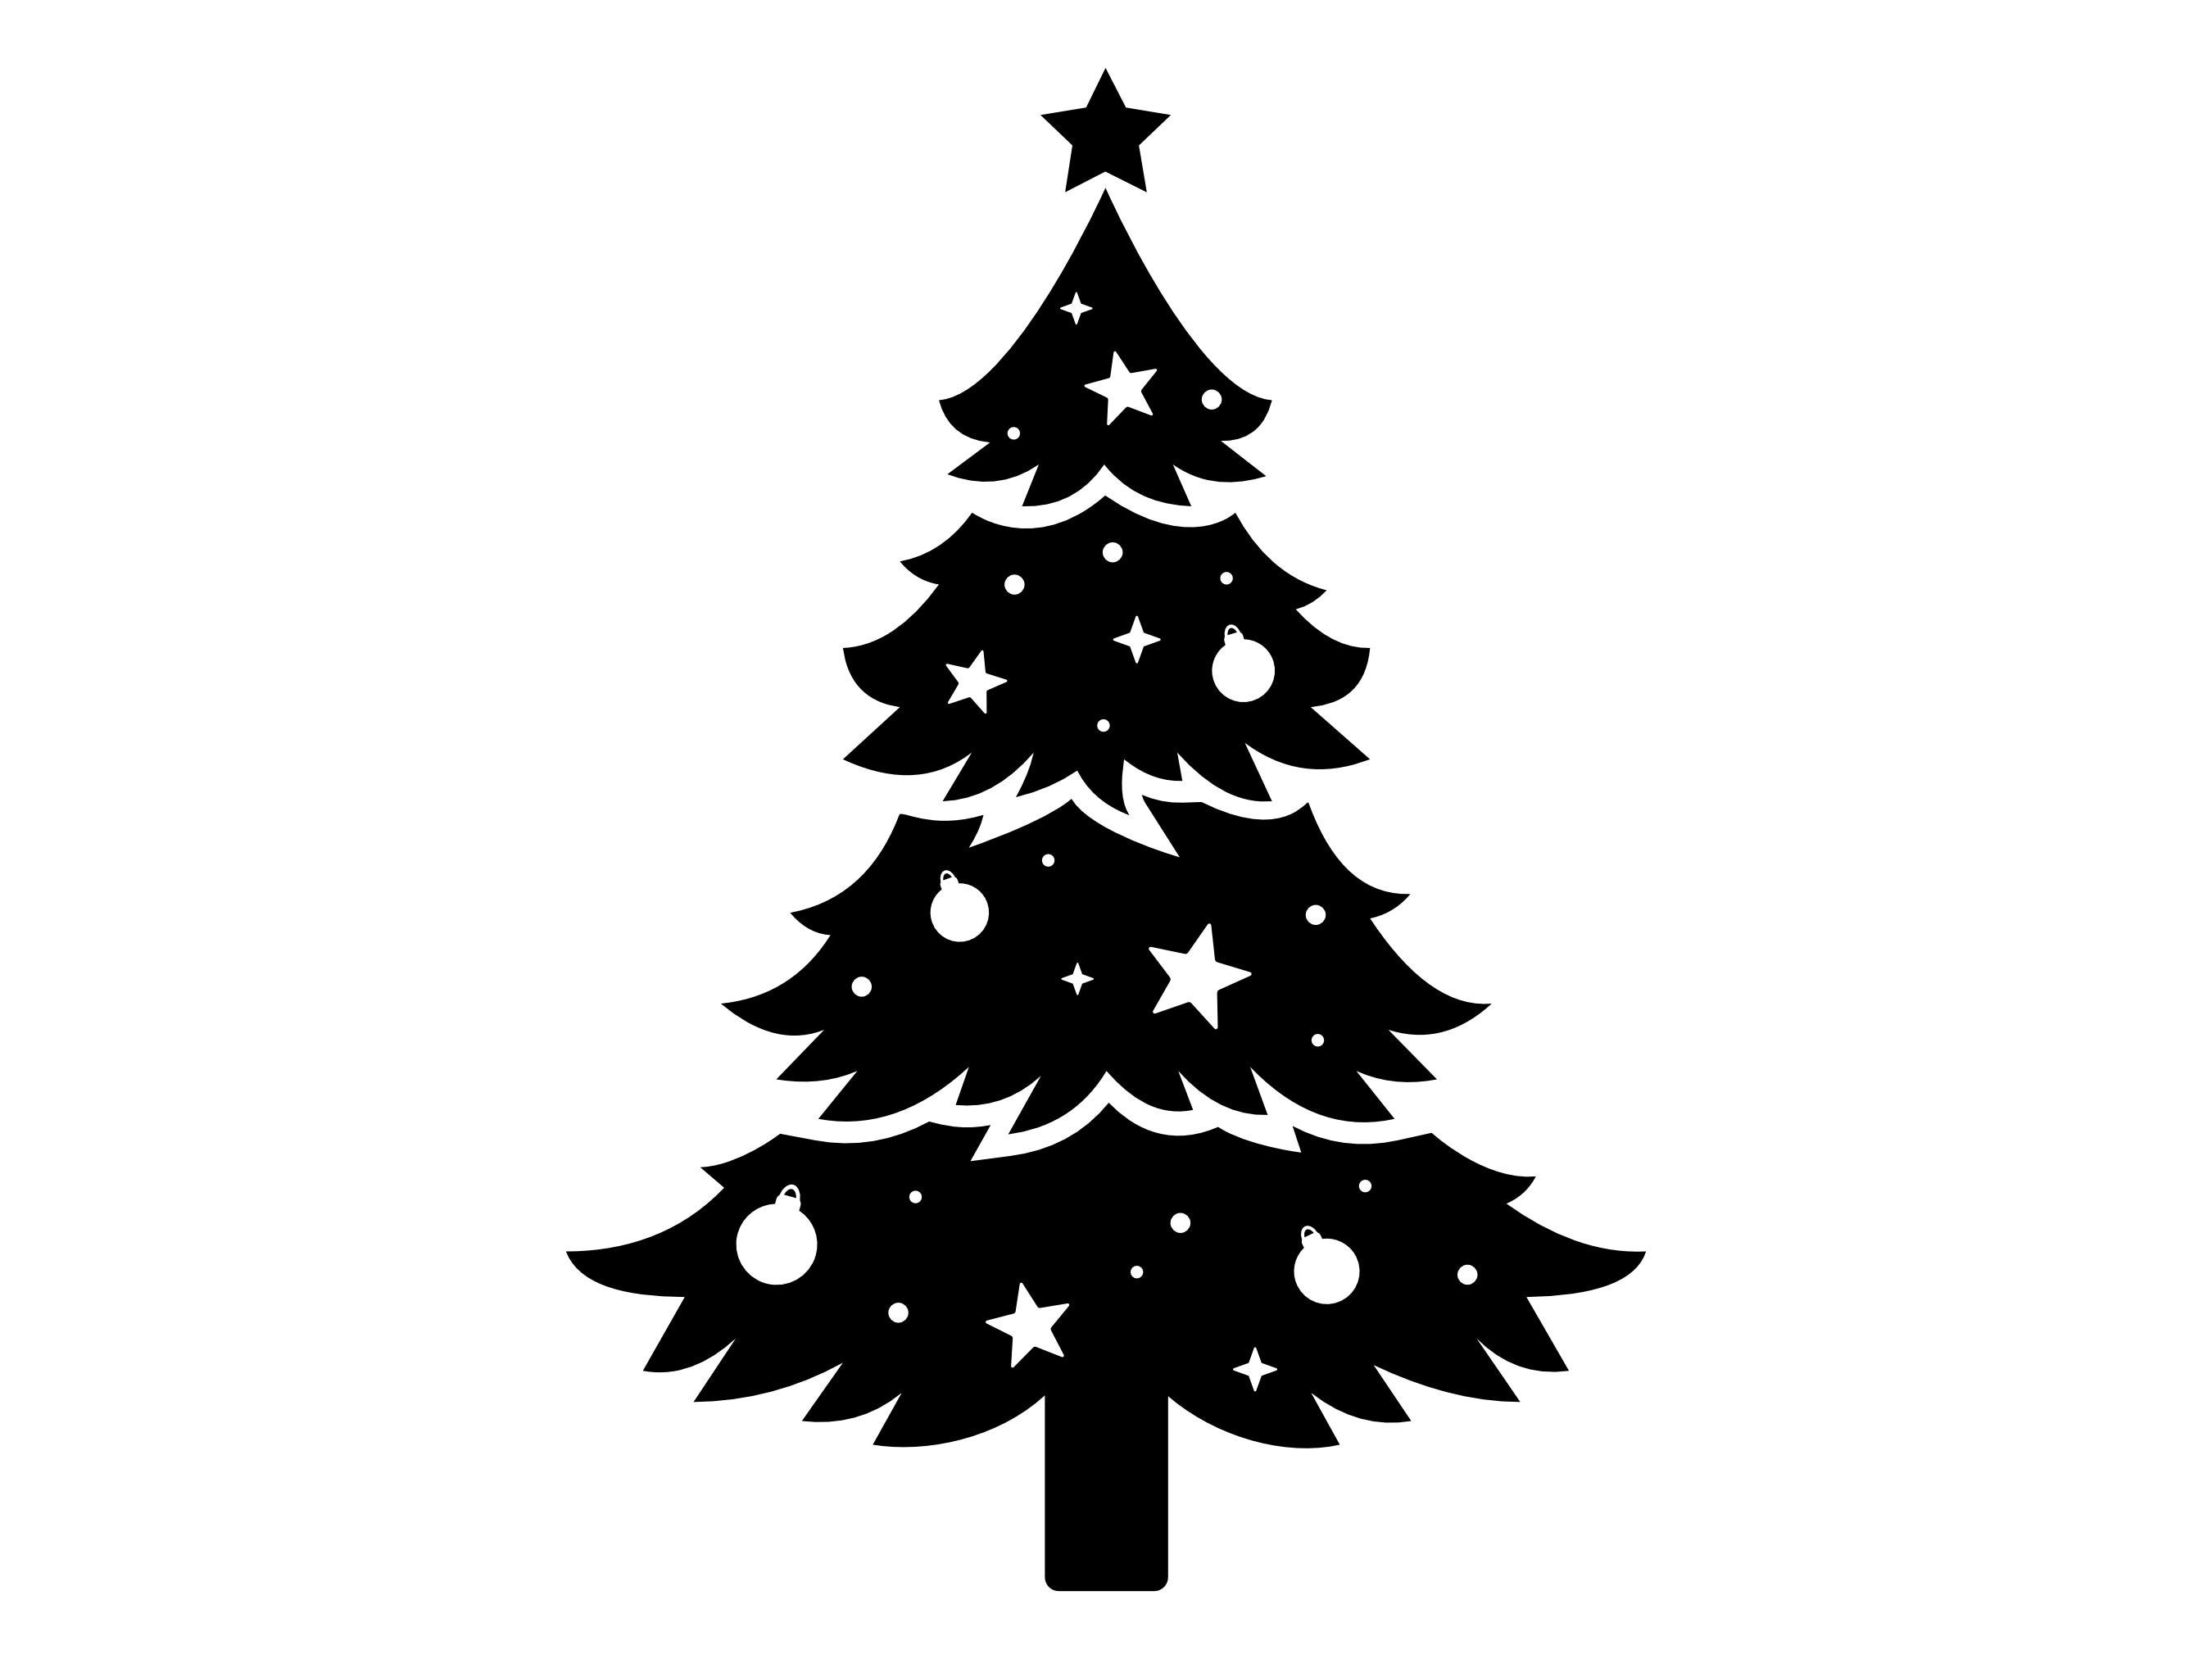 Decorated Christmas Tree SVG, Christmas Tree Silhouette, Christmas Tree Clip Art, Christmas Tree Cut File, Black and White Christmas SVG